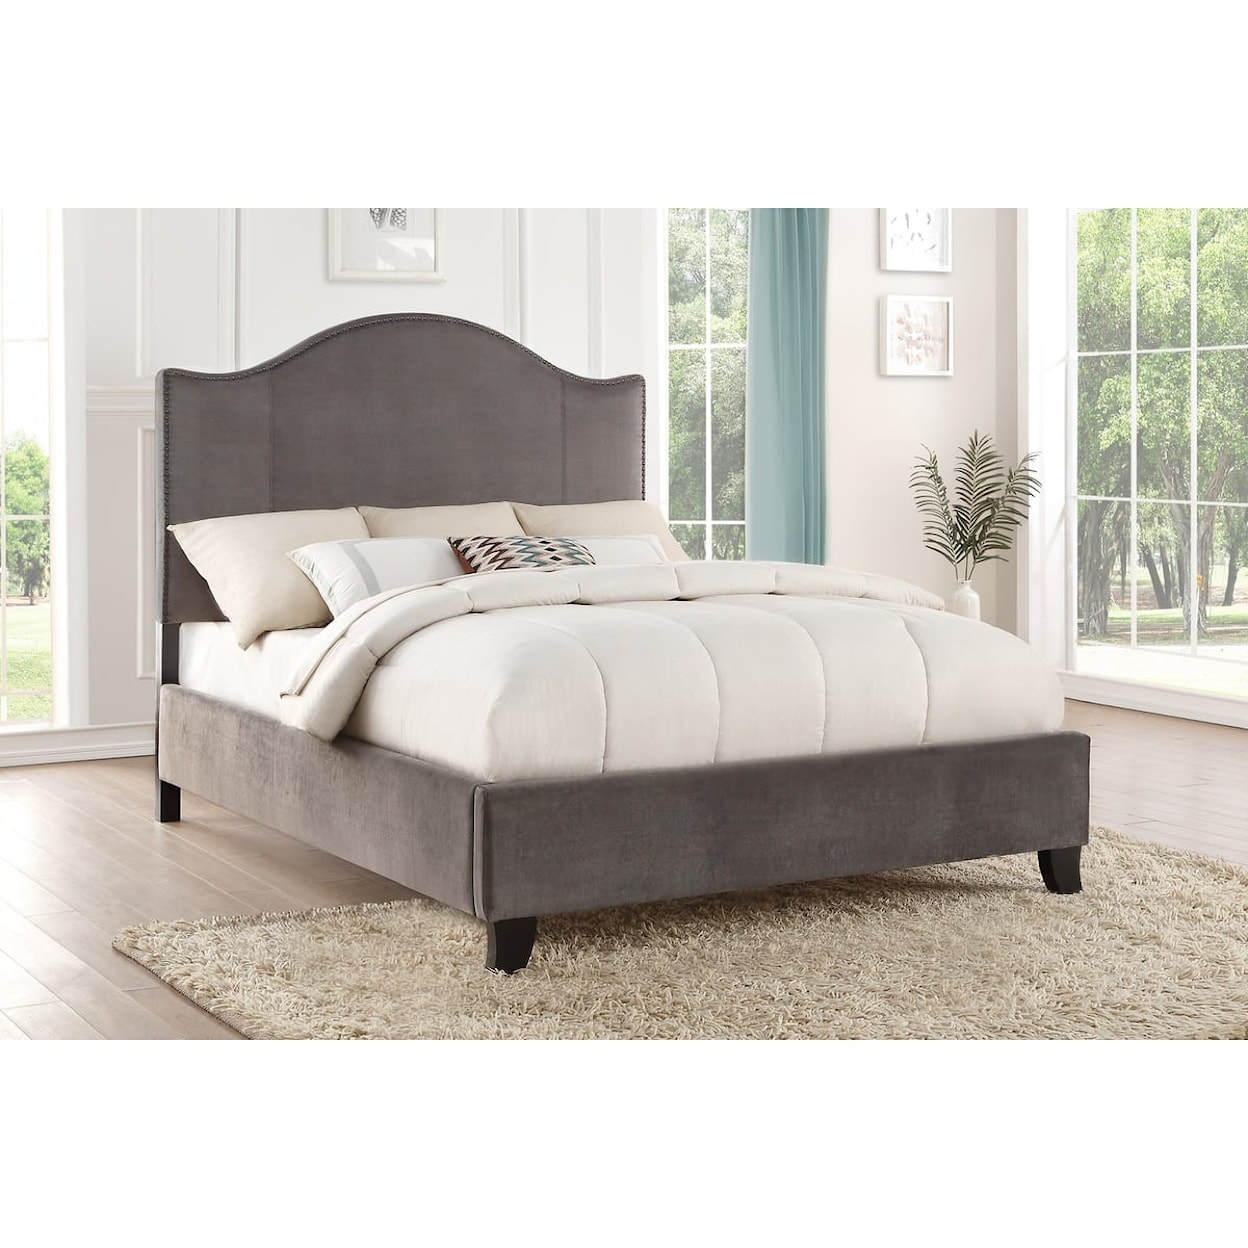 Homelegance Furniture Carlow Full Bed